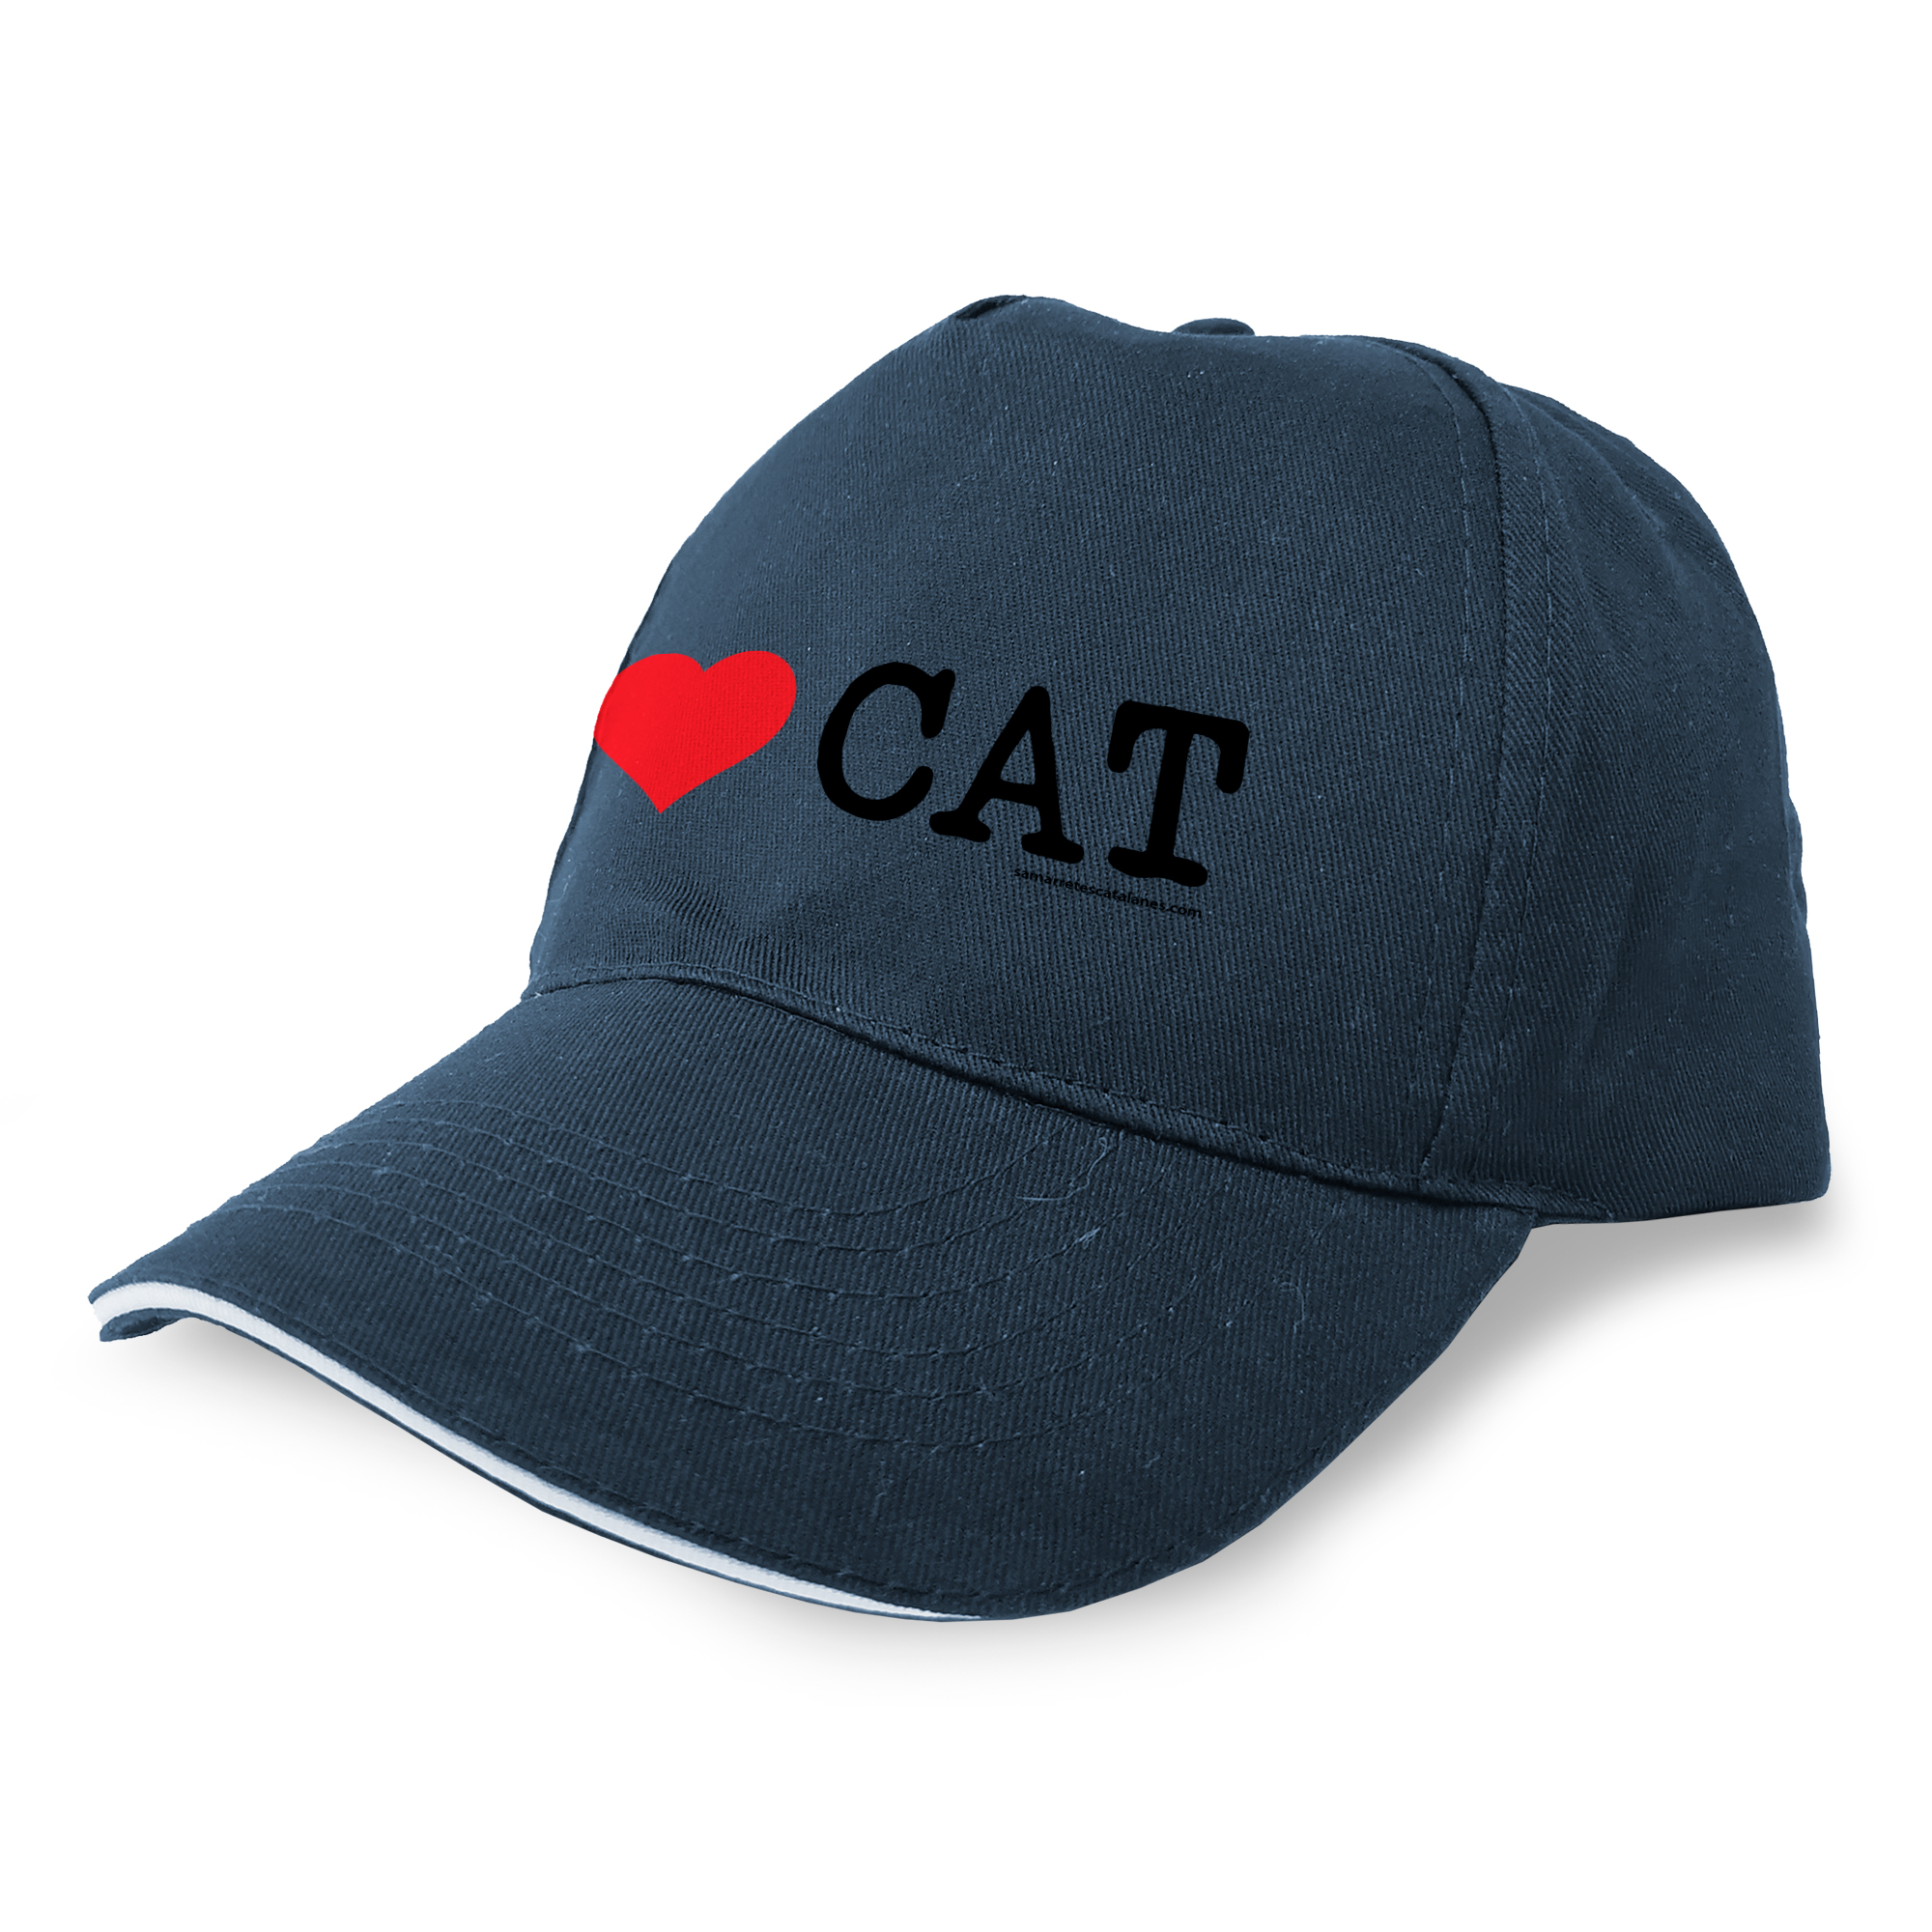 Czapka Katalonia I Love CAT Unisex